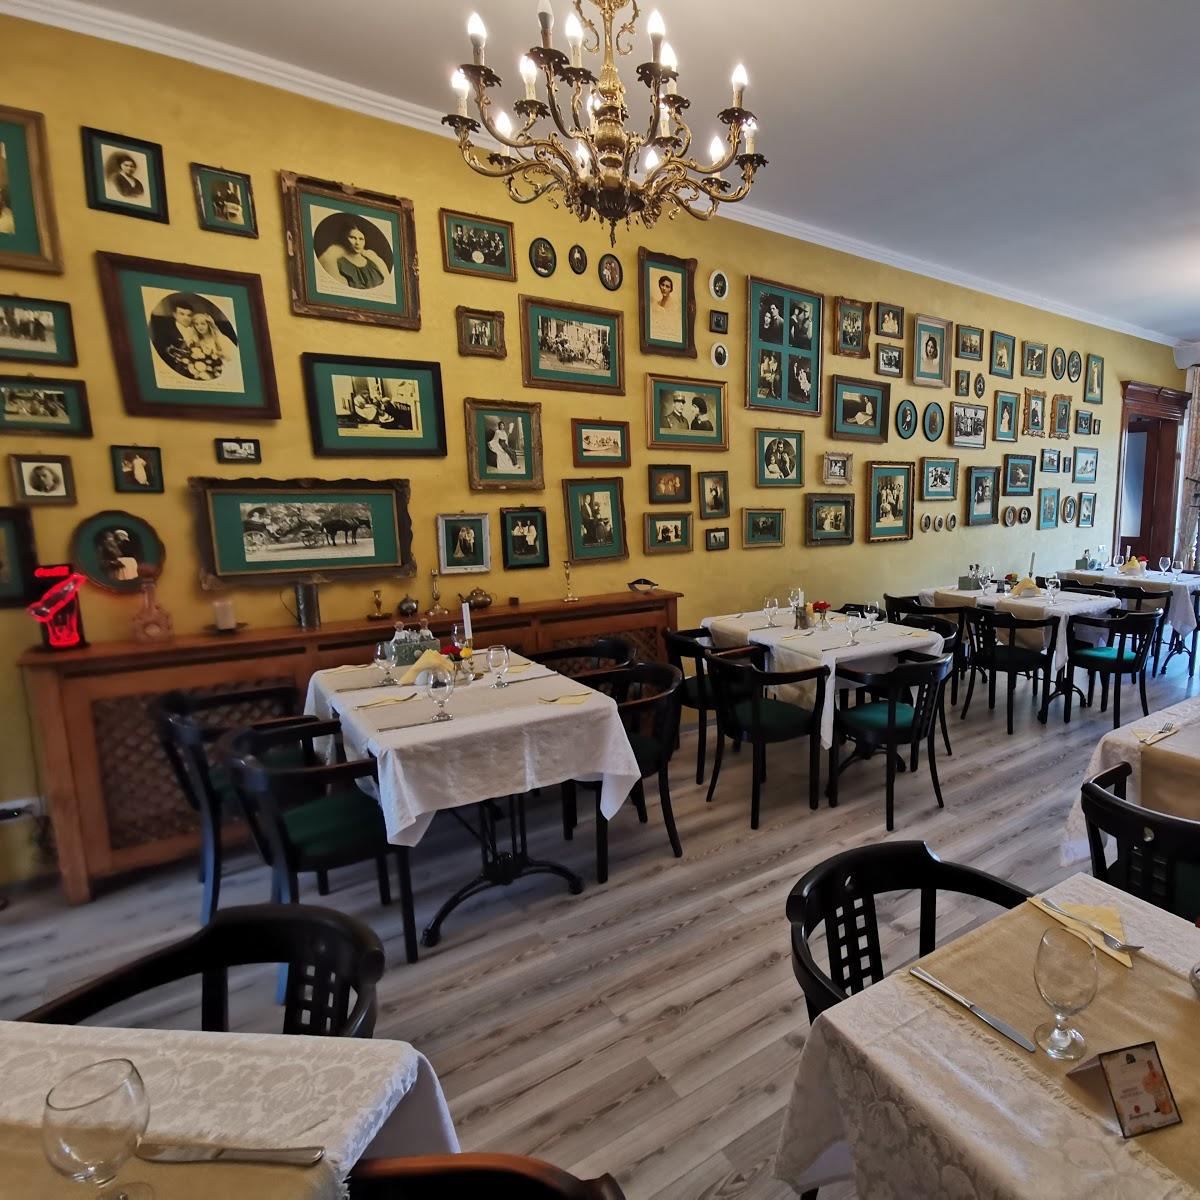 Restaurant "La Conac" in Alba Iulia